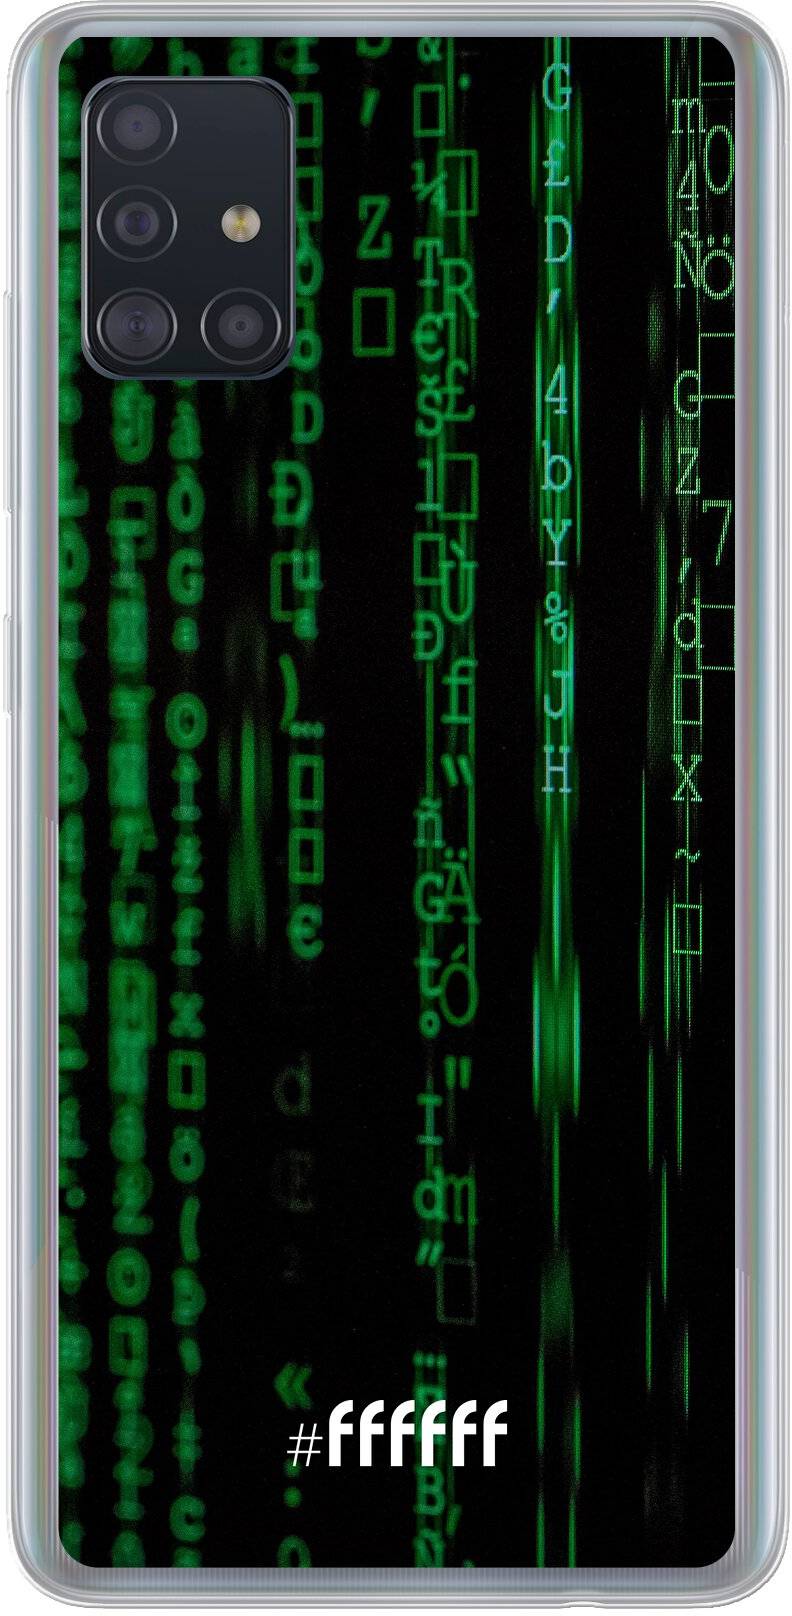 Hacking The Matrix Galaxy A51